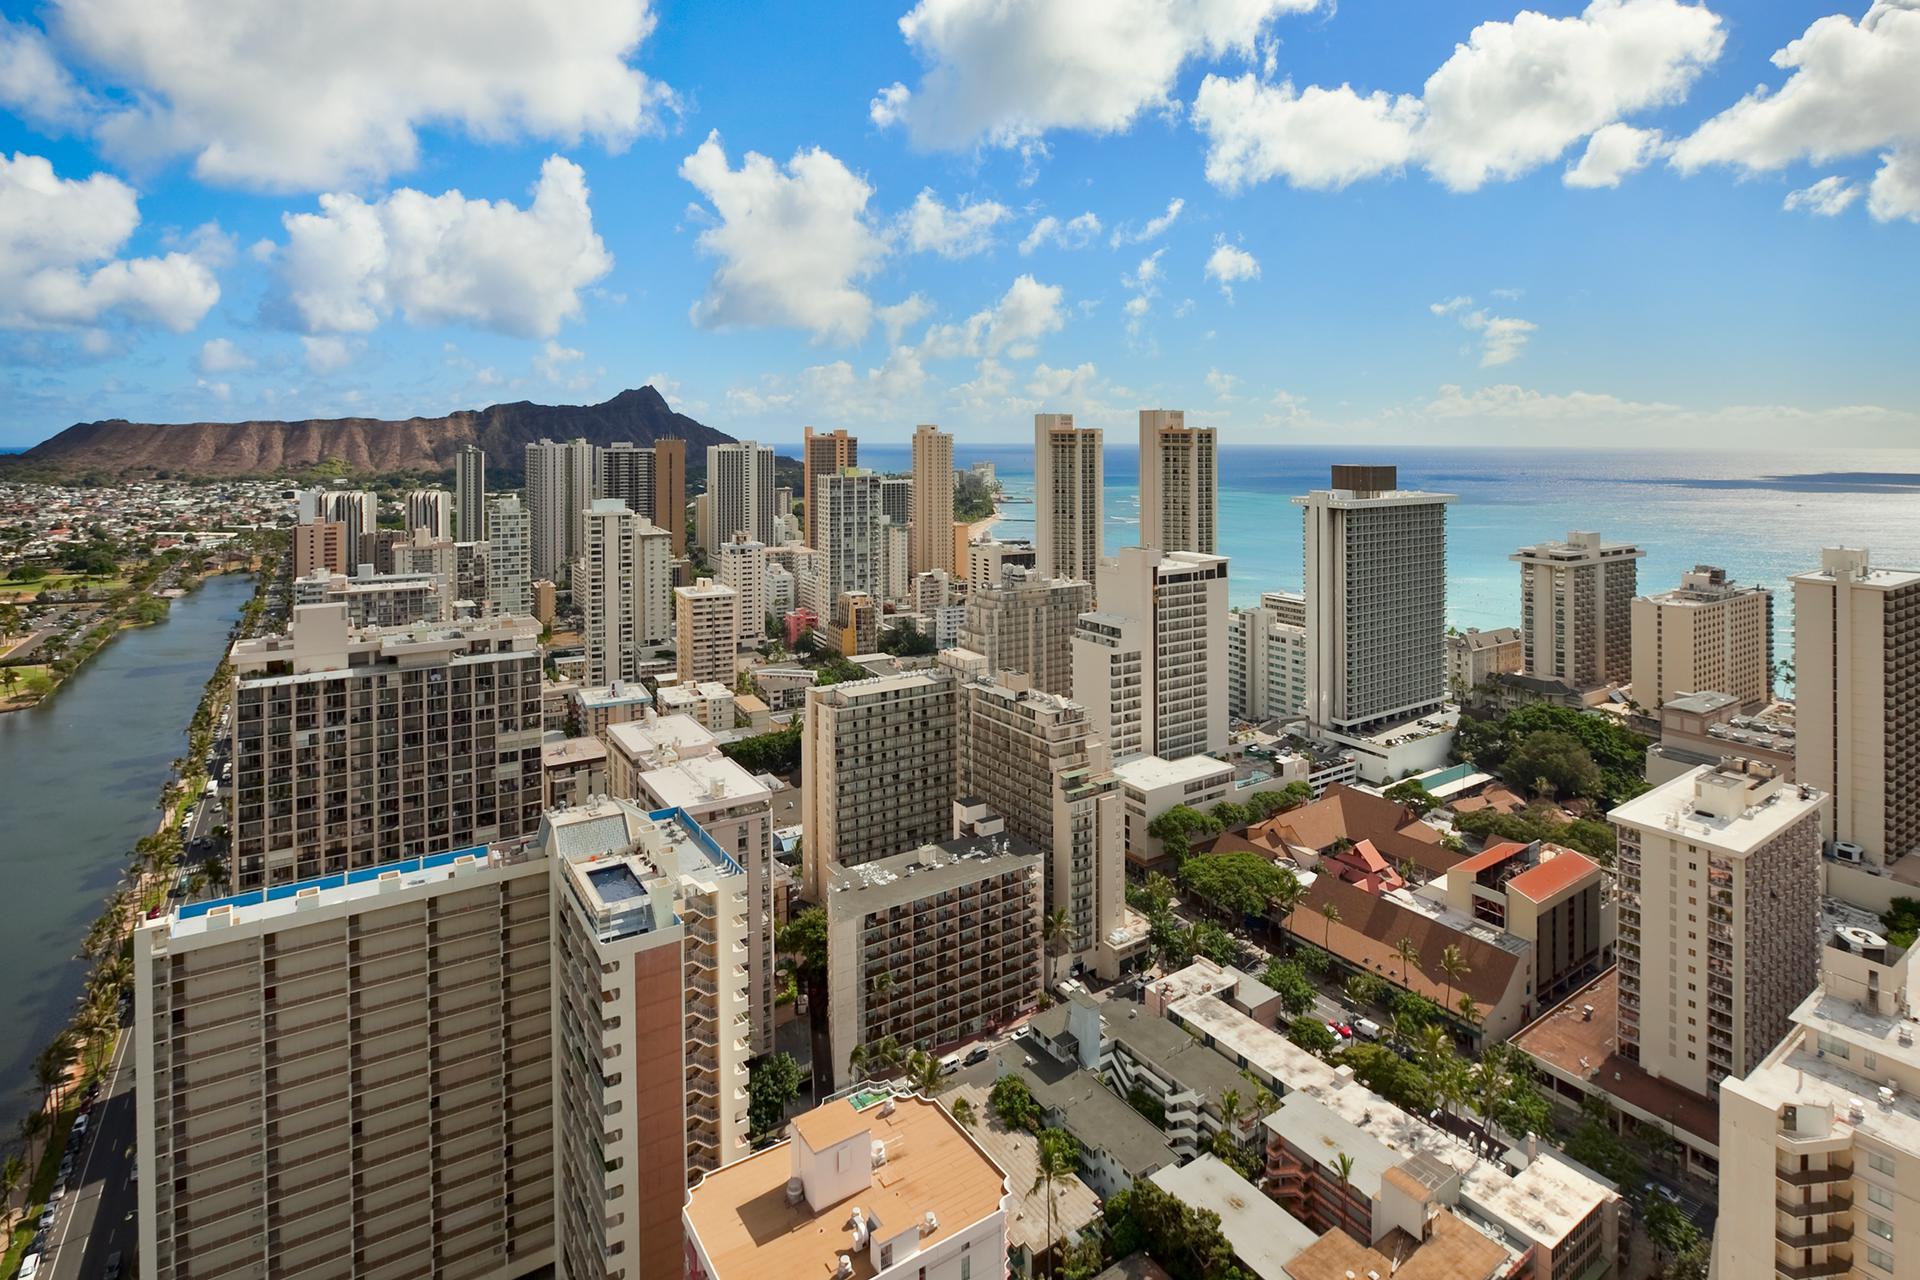 View of Waikiki from Aqua Skyline at Island Colony hotel